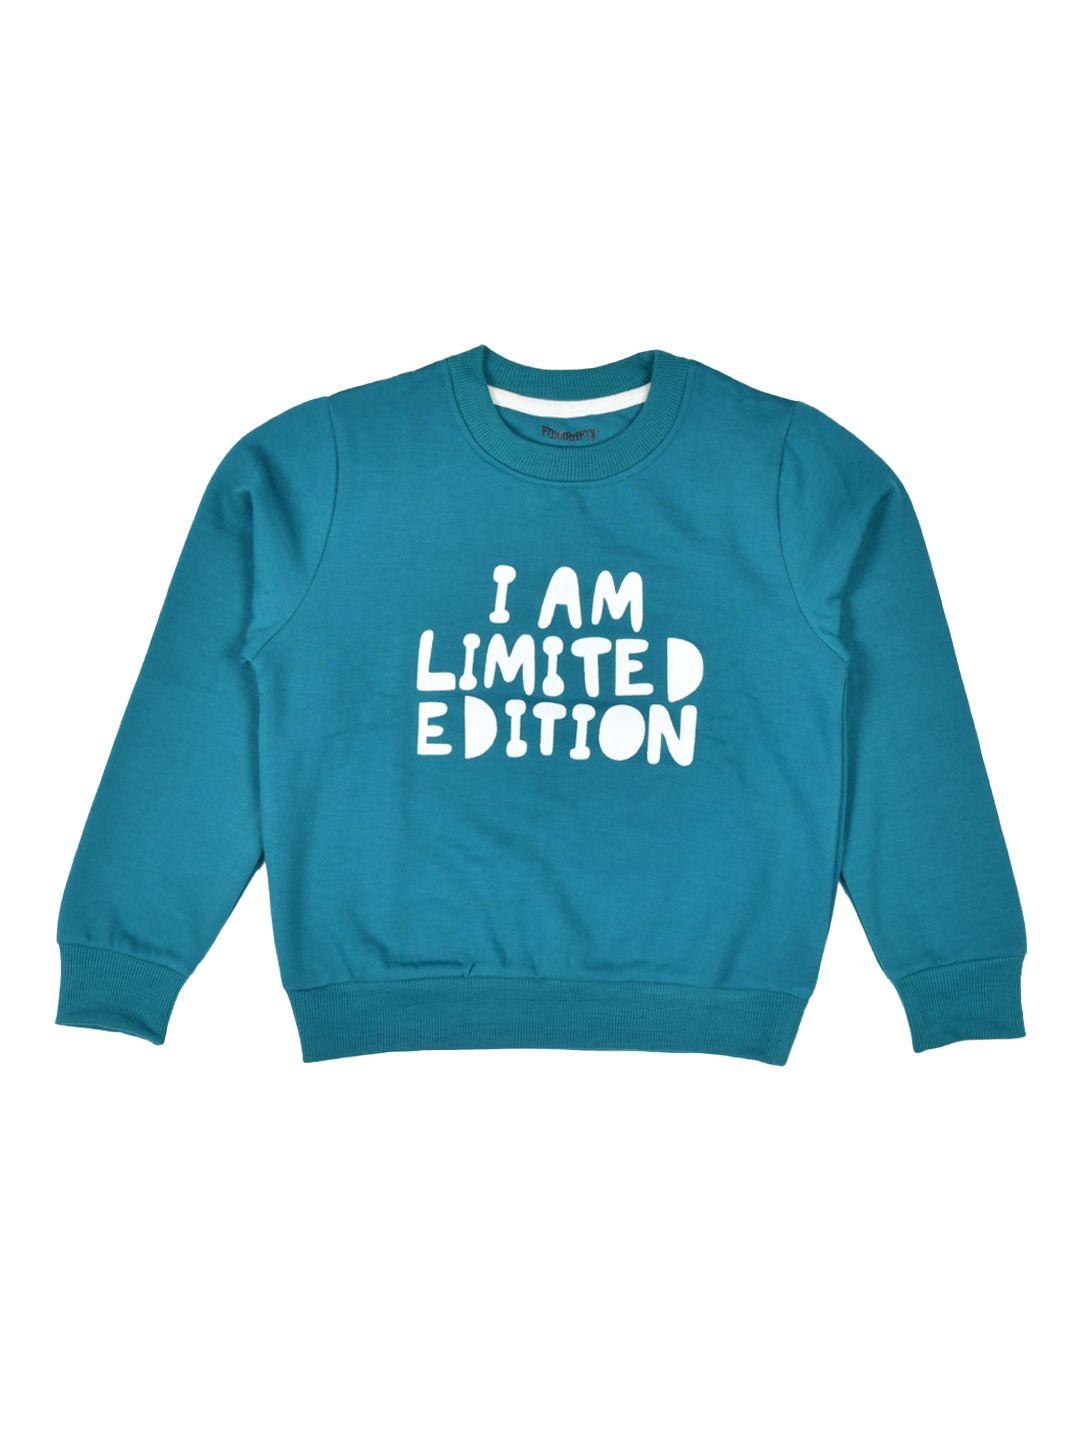 funkrafts unisex kids blue printed fleece sweatshirt